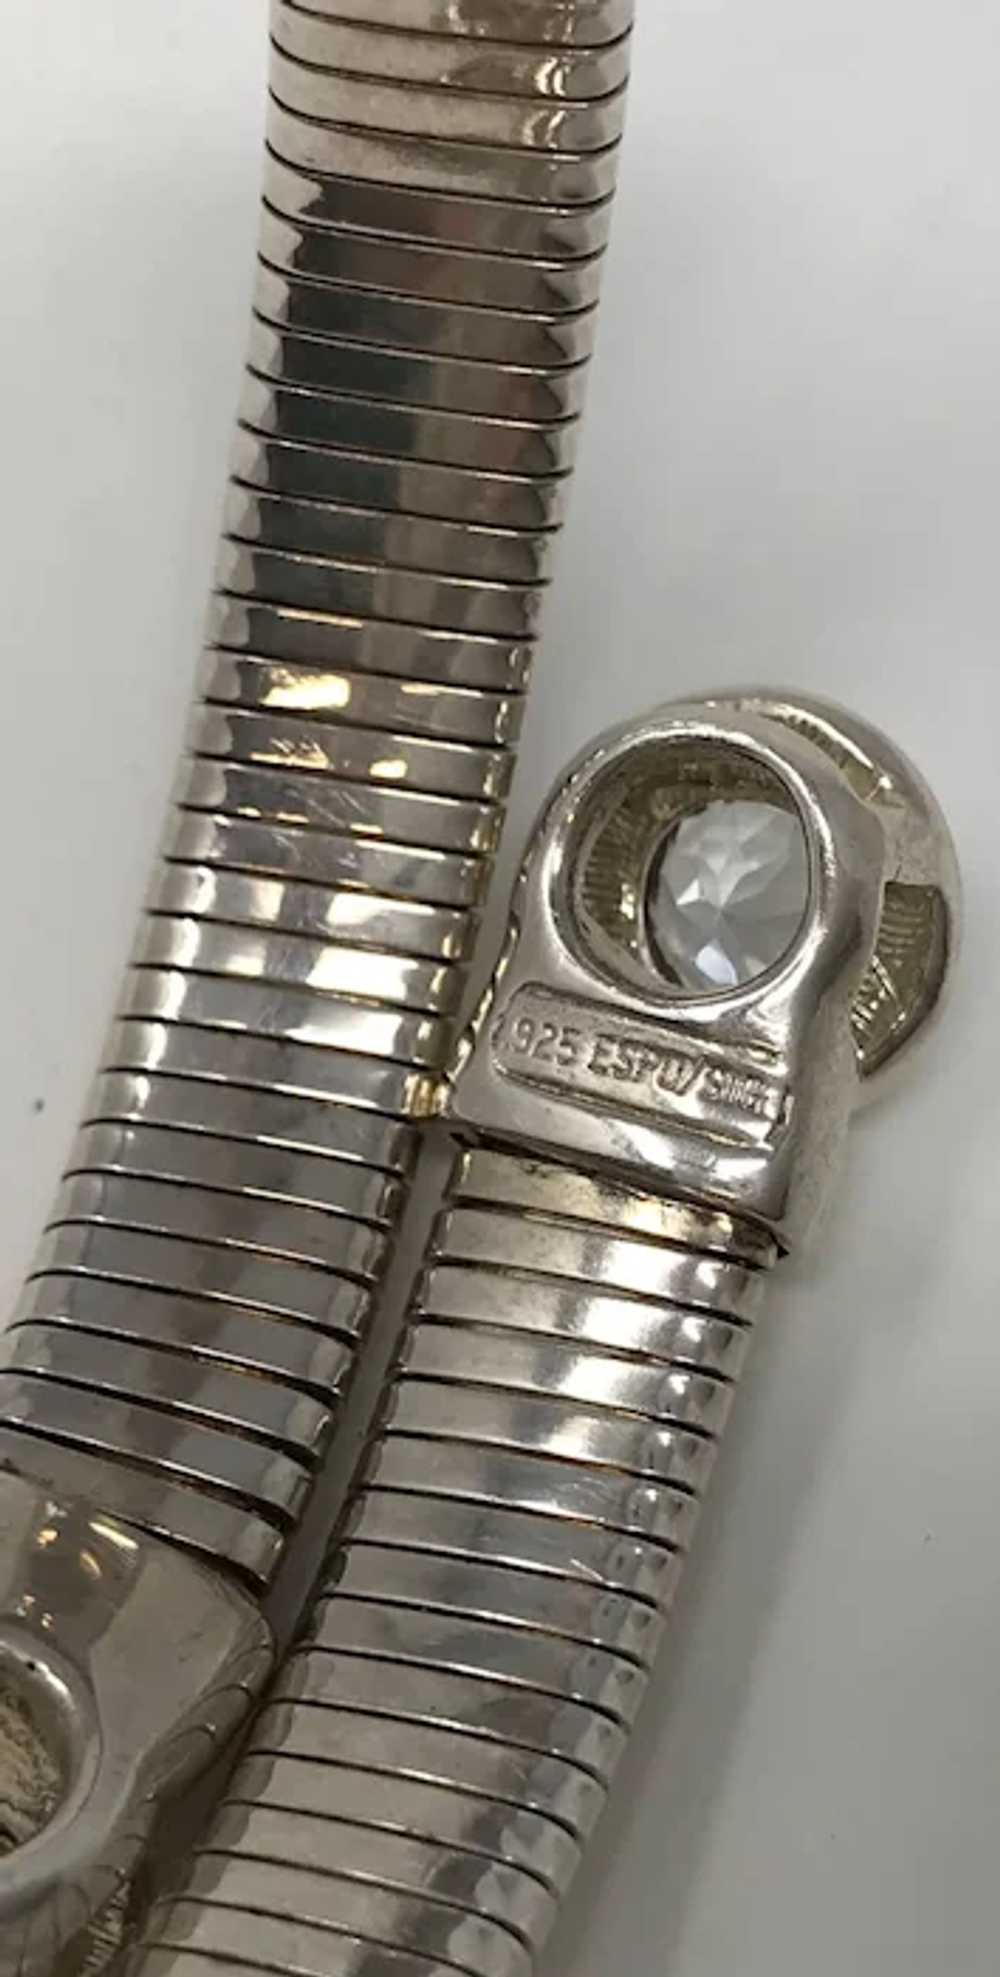 Joseph Esposito 925 Sterling Silver Bracelet - image 4